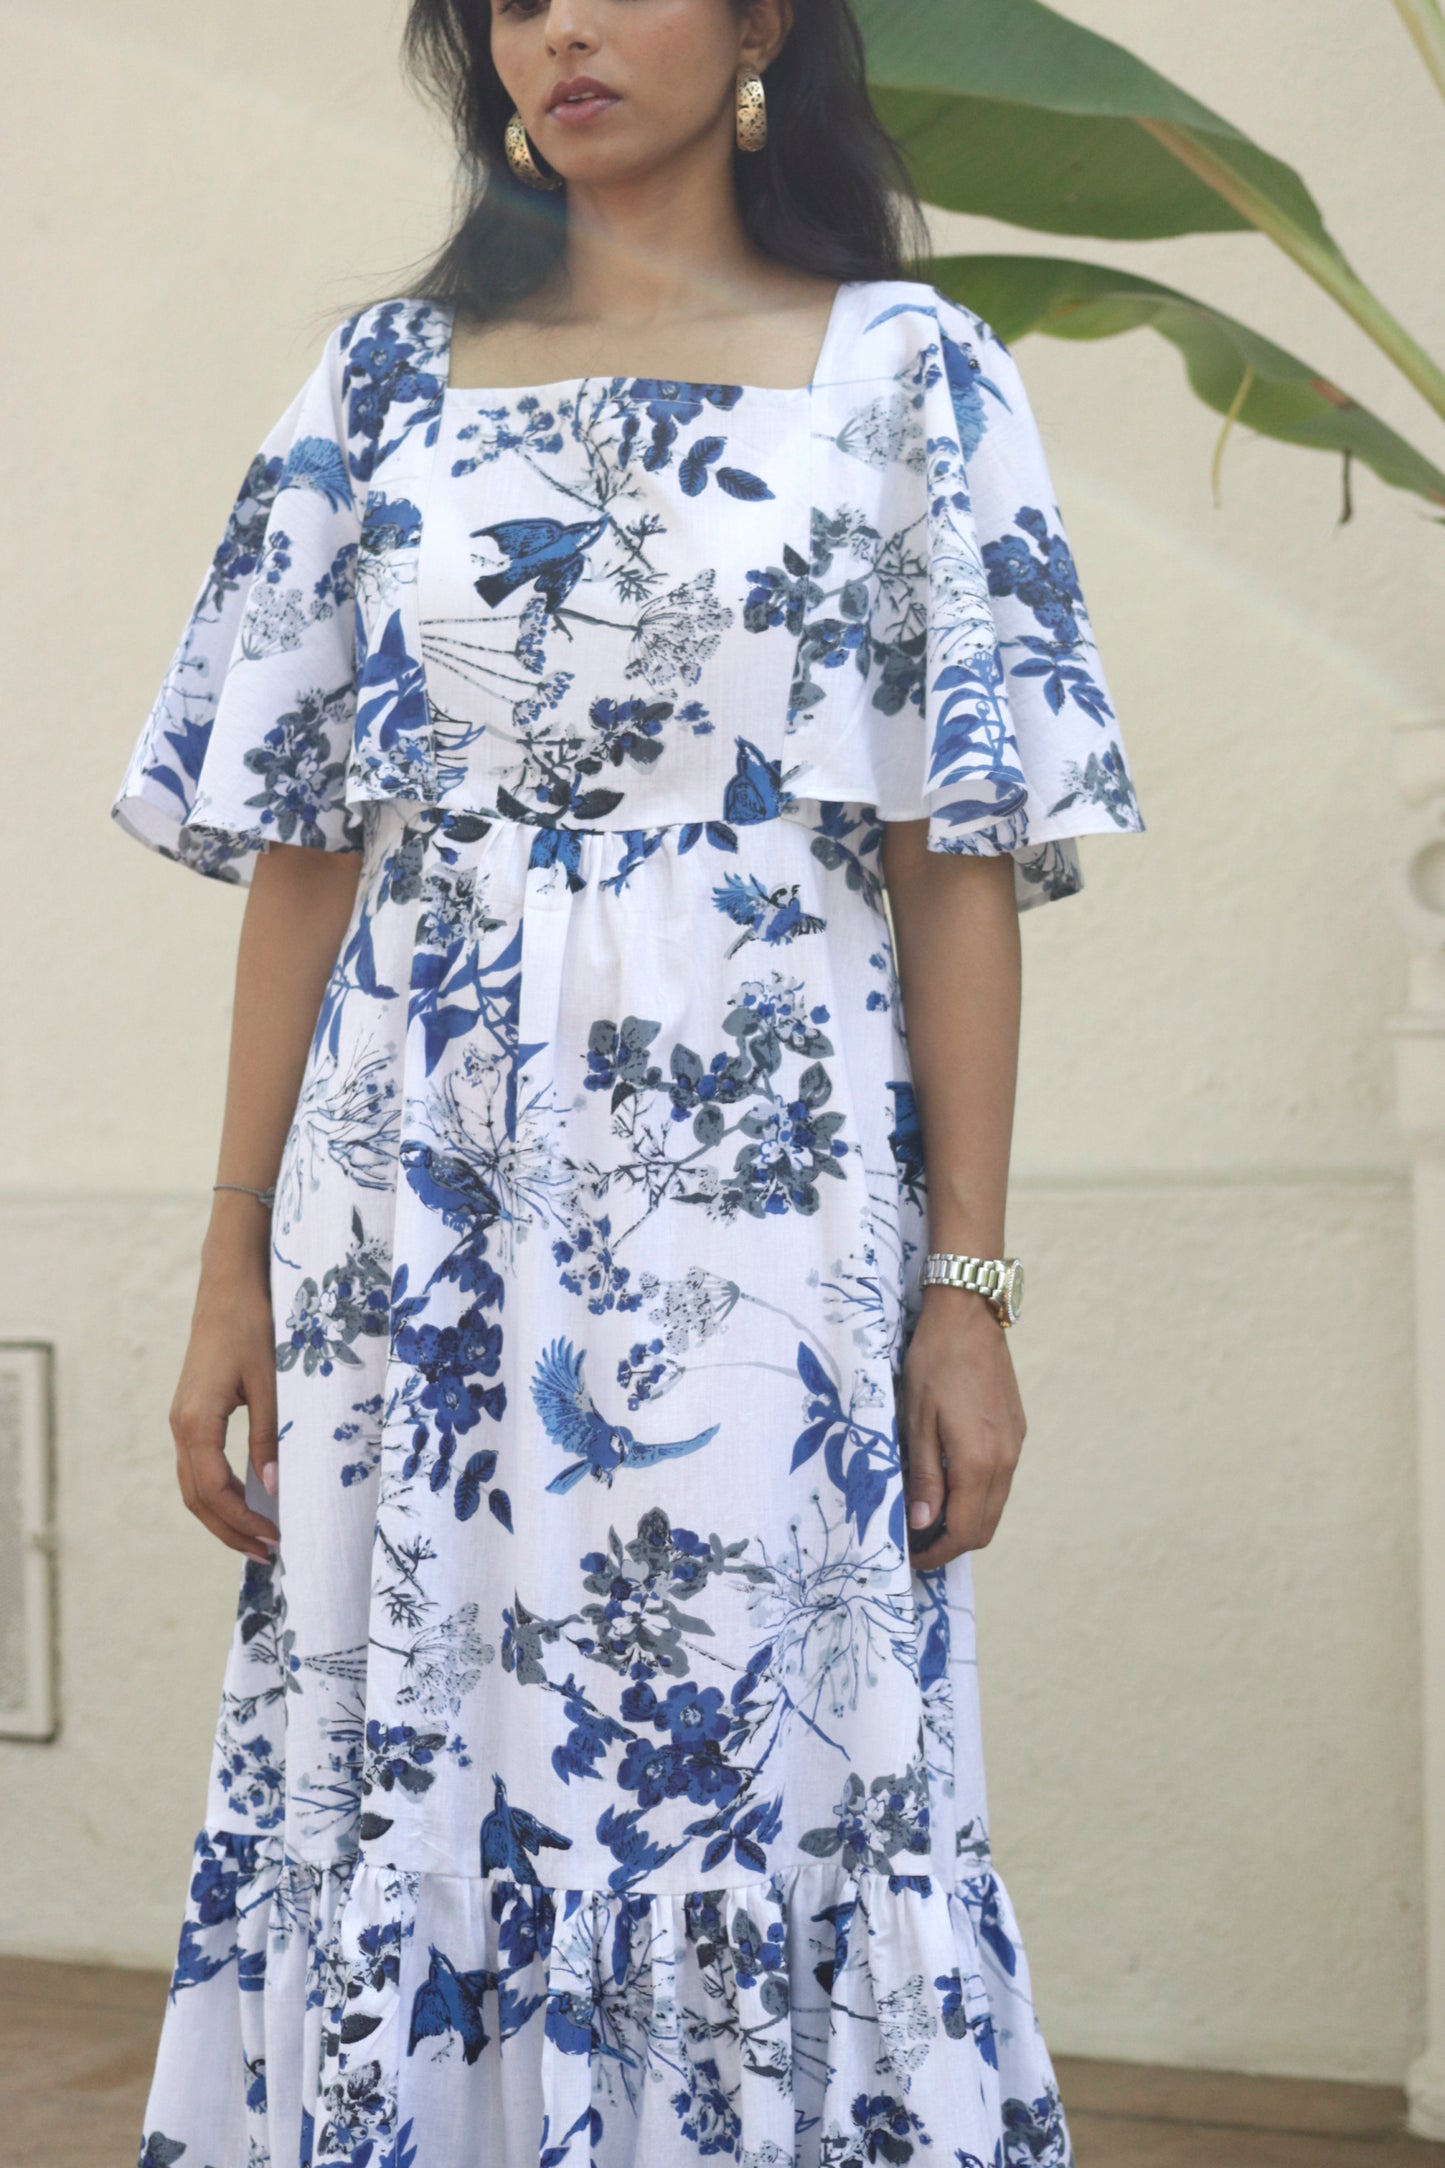 The Floral Frill Cotton Dress : Buy Cotton Dress